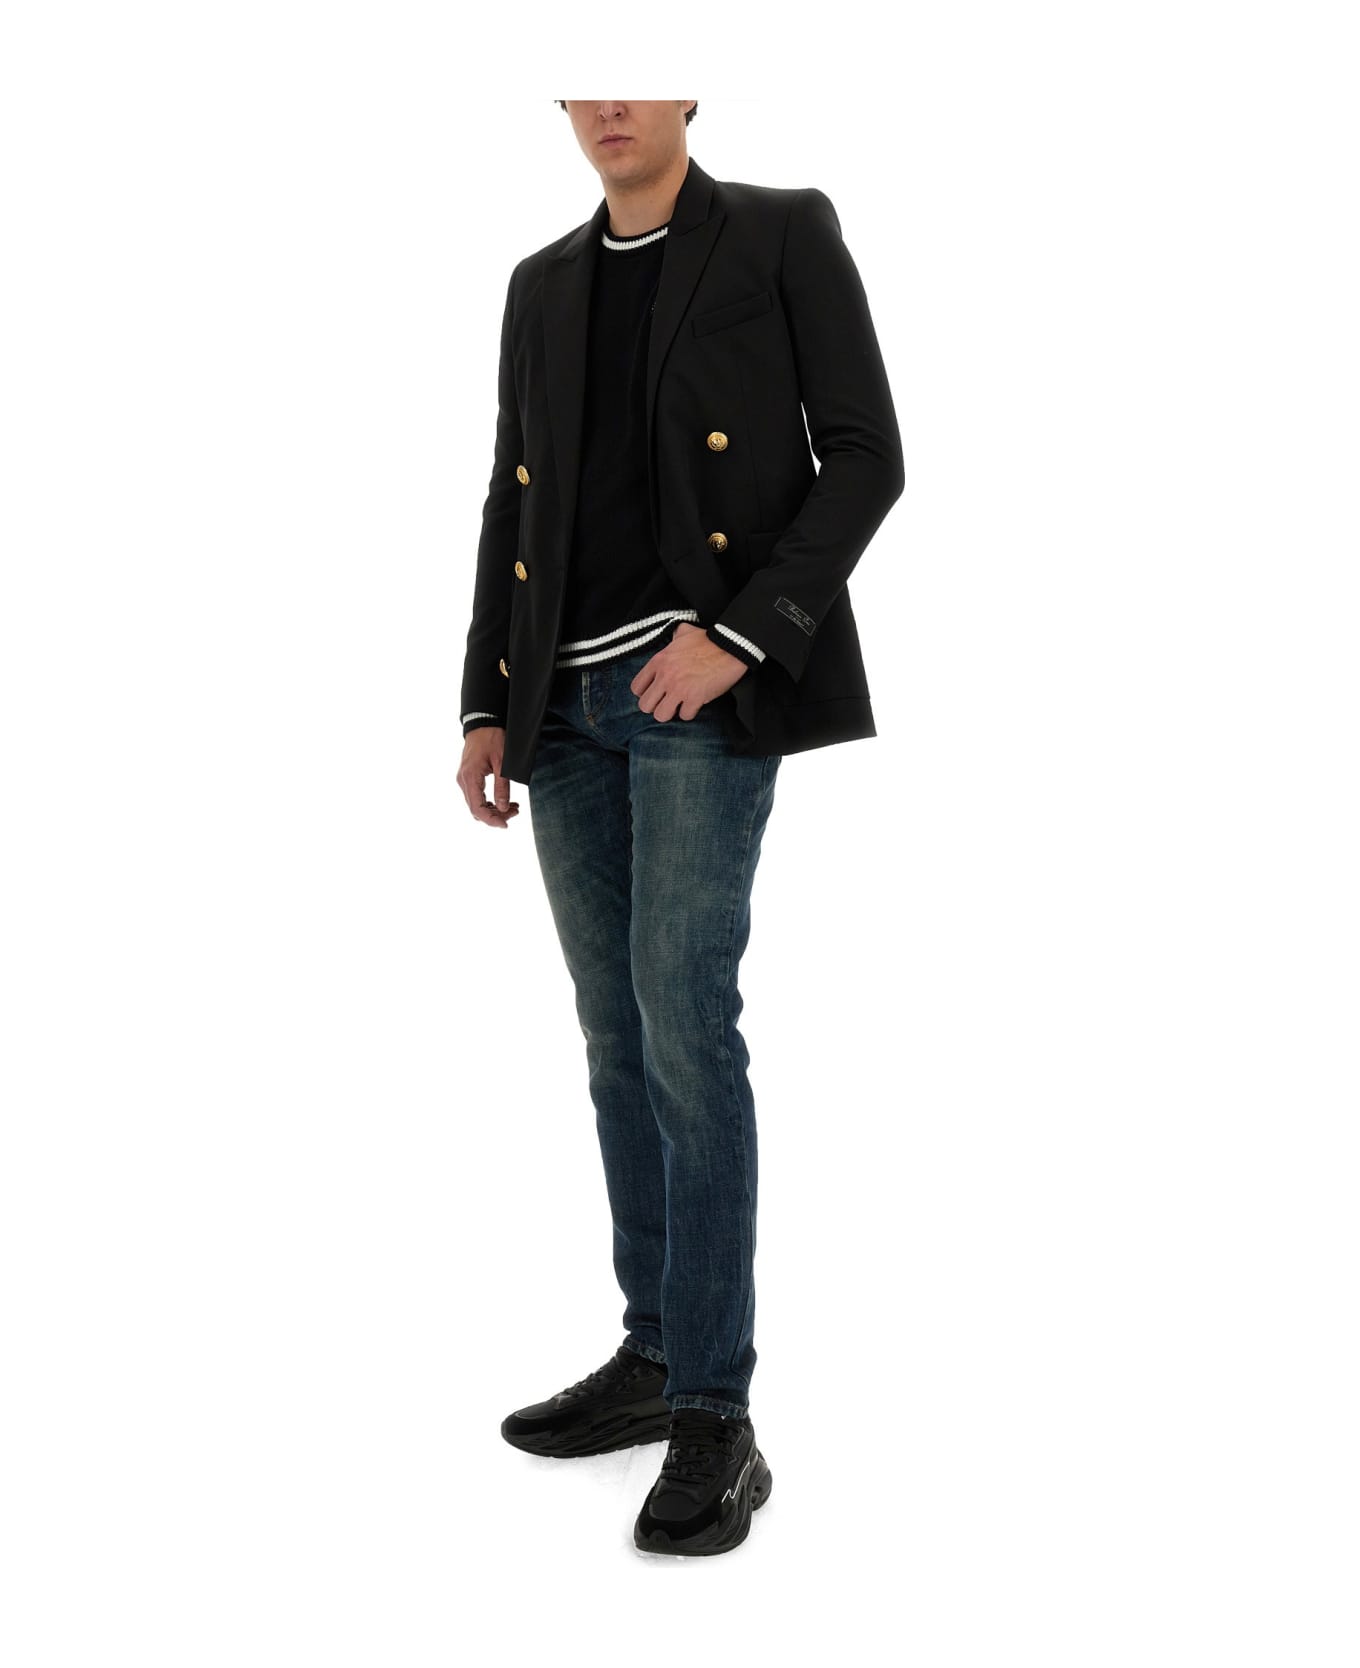 Balmain Technical Wool Jacket - NOIR (Black)